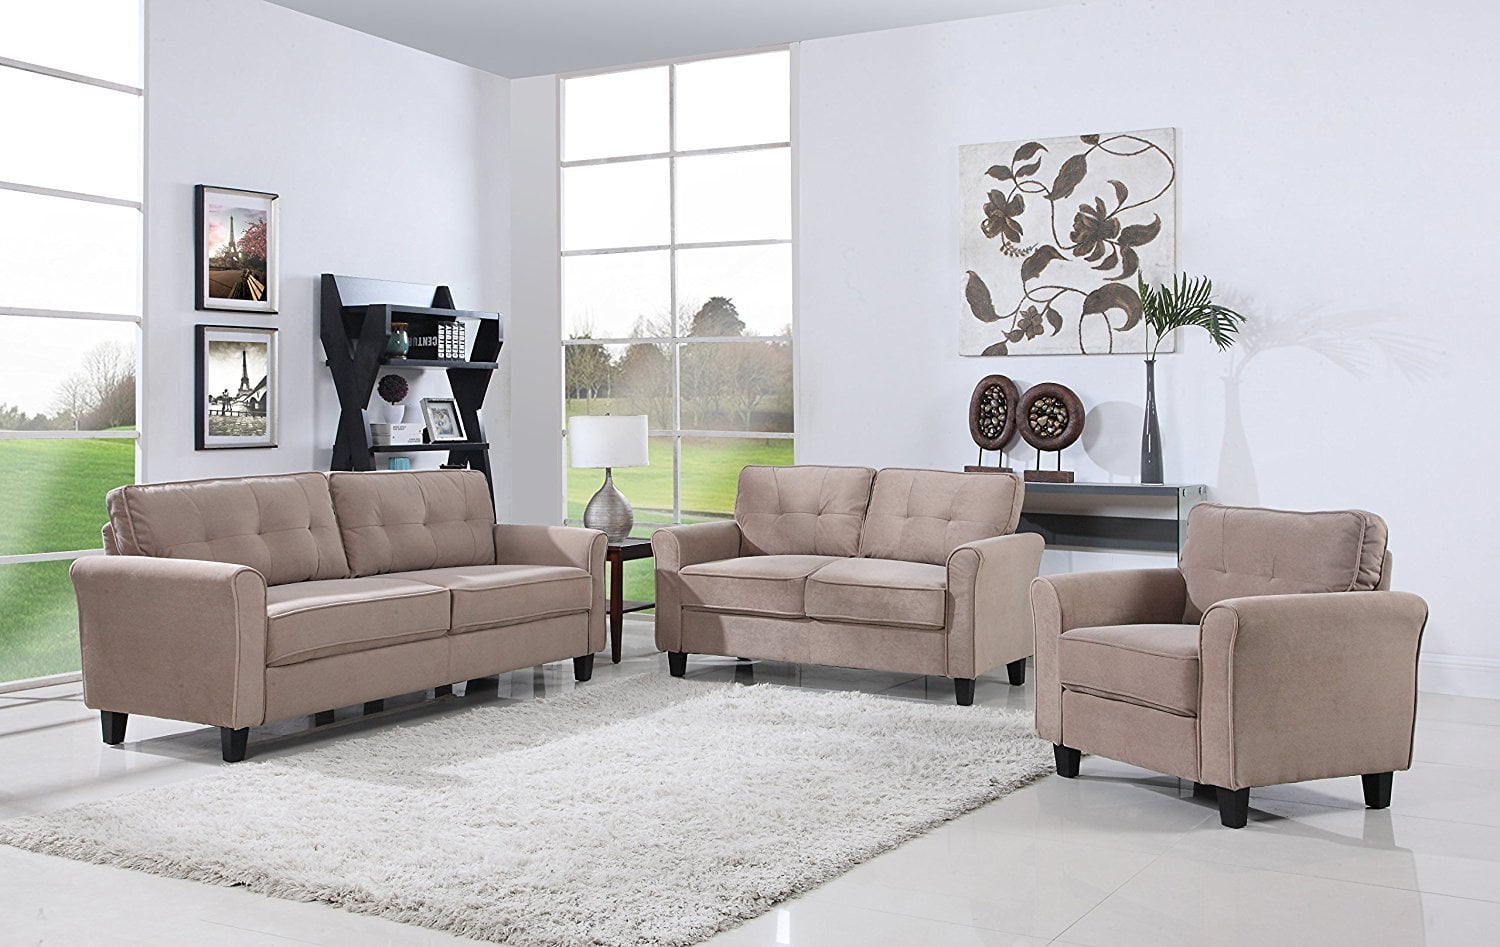 Classic Living Room Furniture Set - Sofa, Love Seat ...